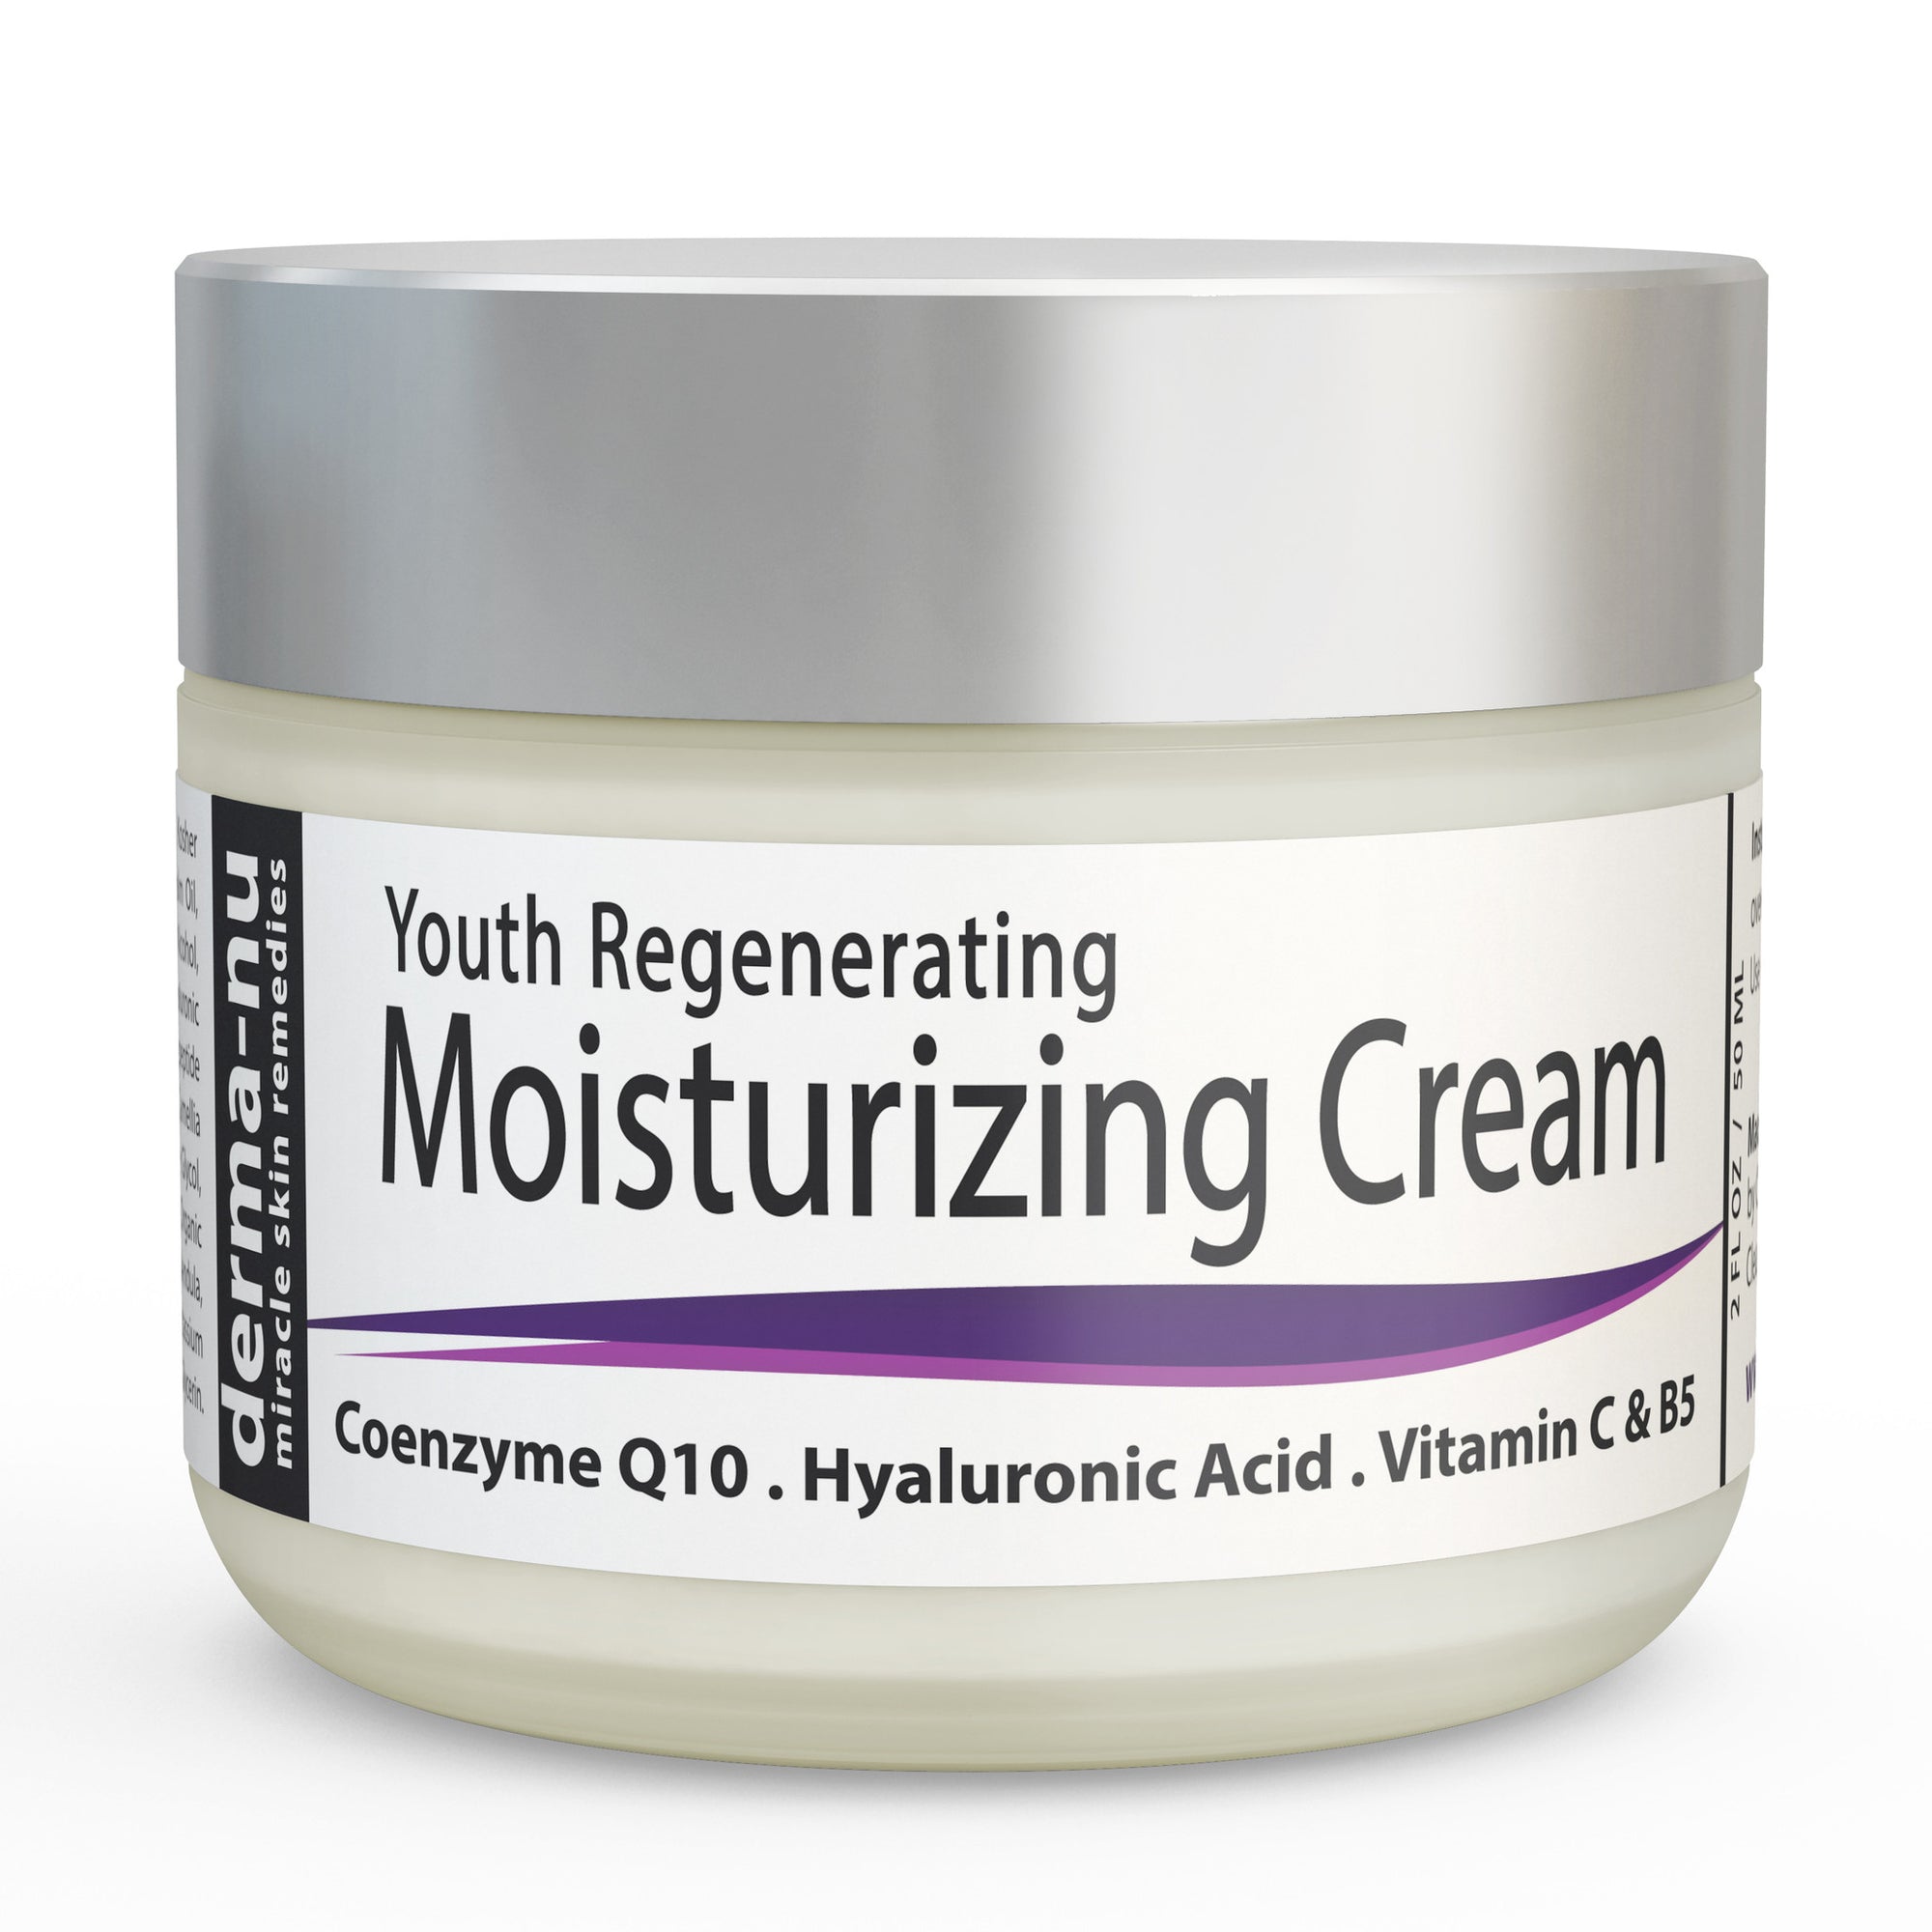 Key Anti Aging Ingredients in Youth Regenerating Moisturizing Cream